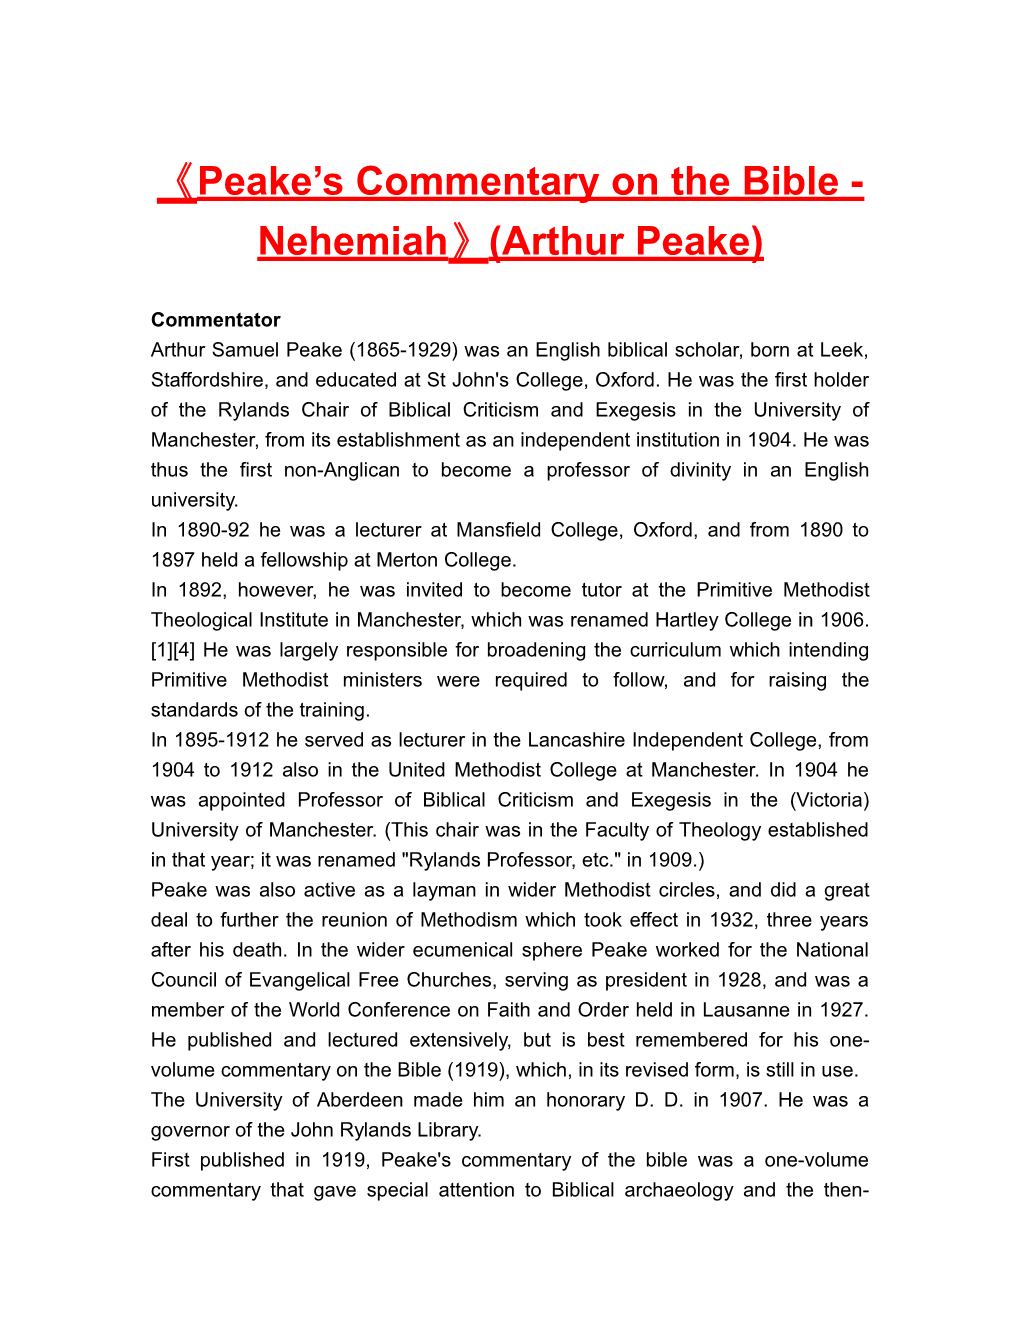 Peake S Commentary on the Bible - Nehemiah (Arthur Peake)